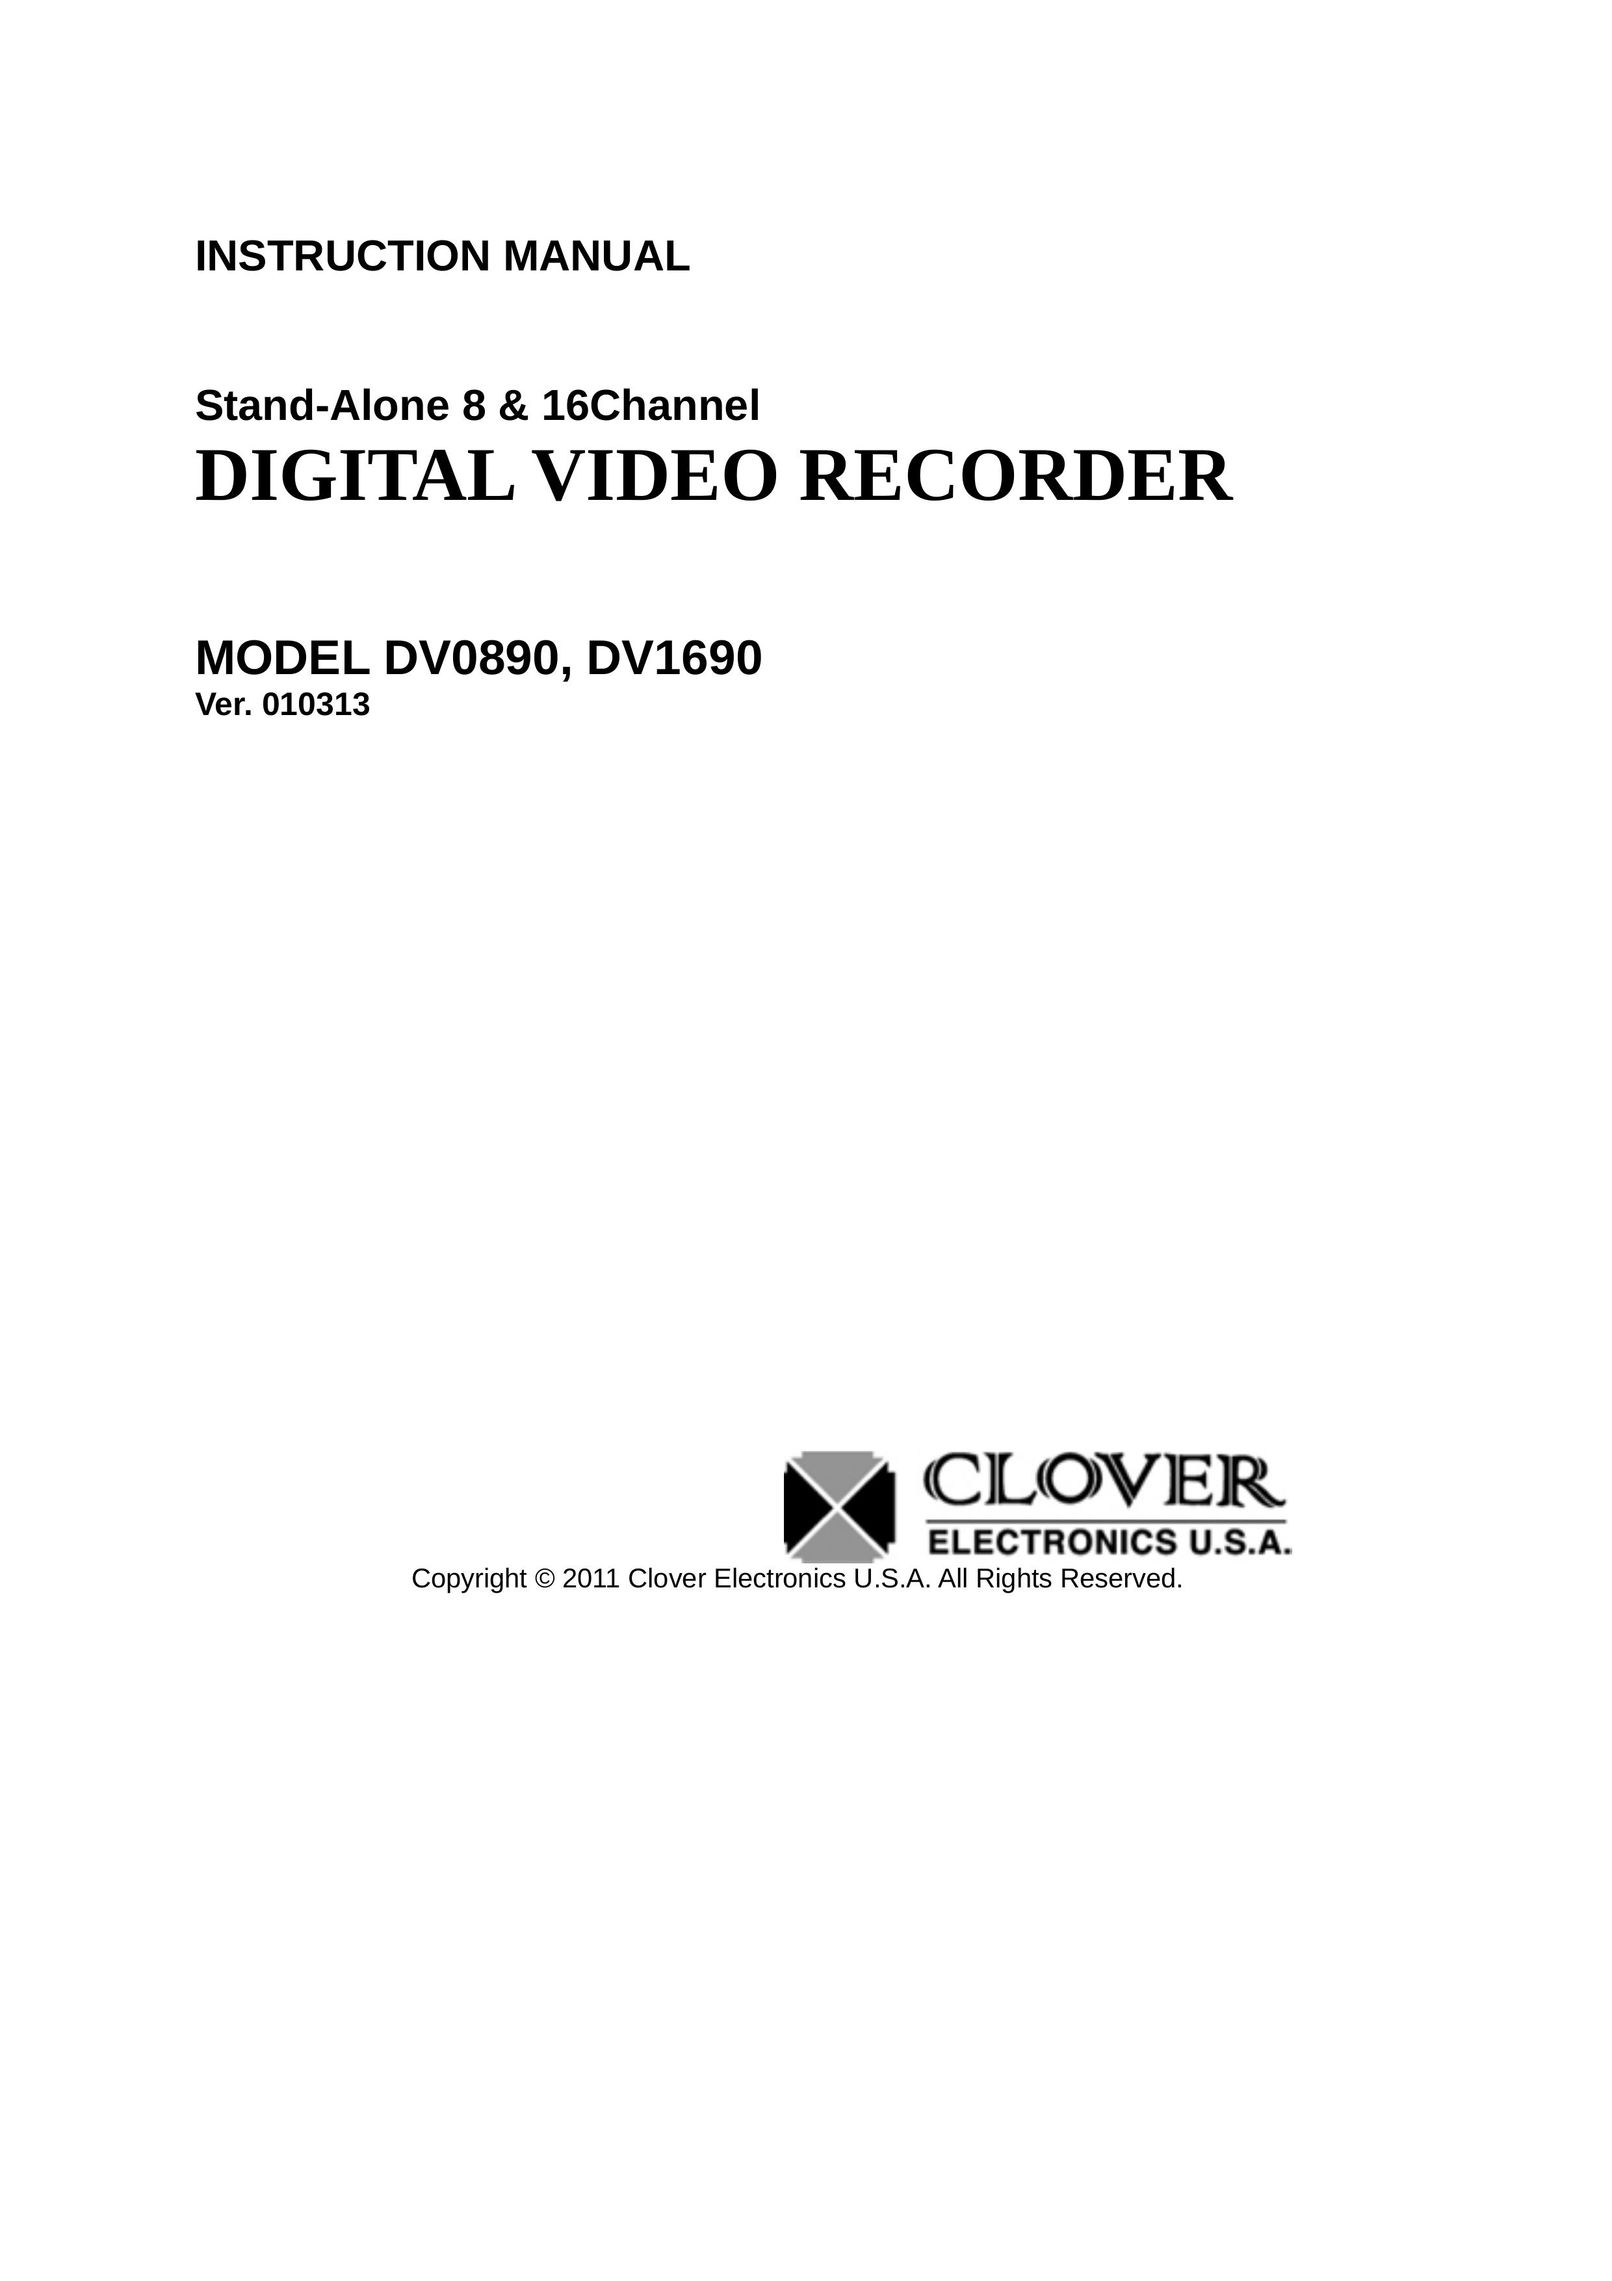 Clover Electronics DV1690 DVR User Manual